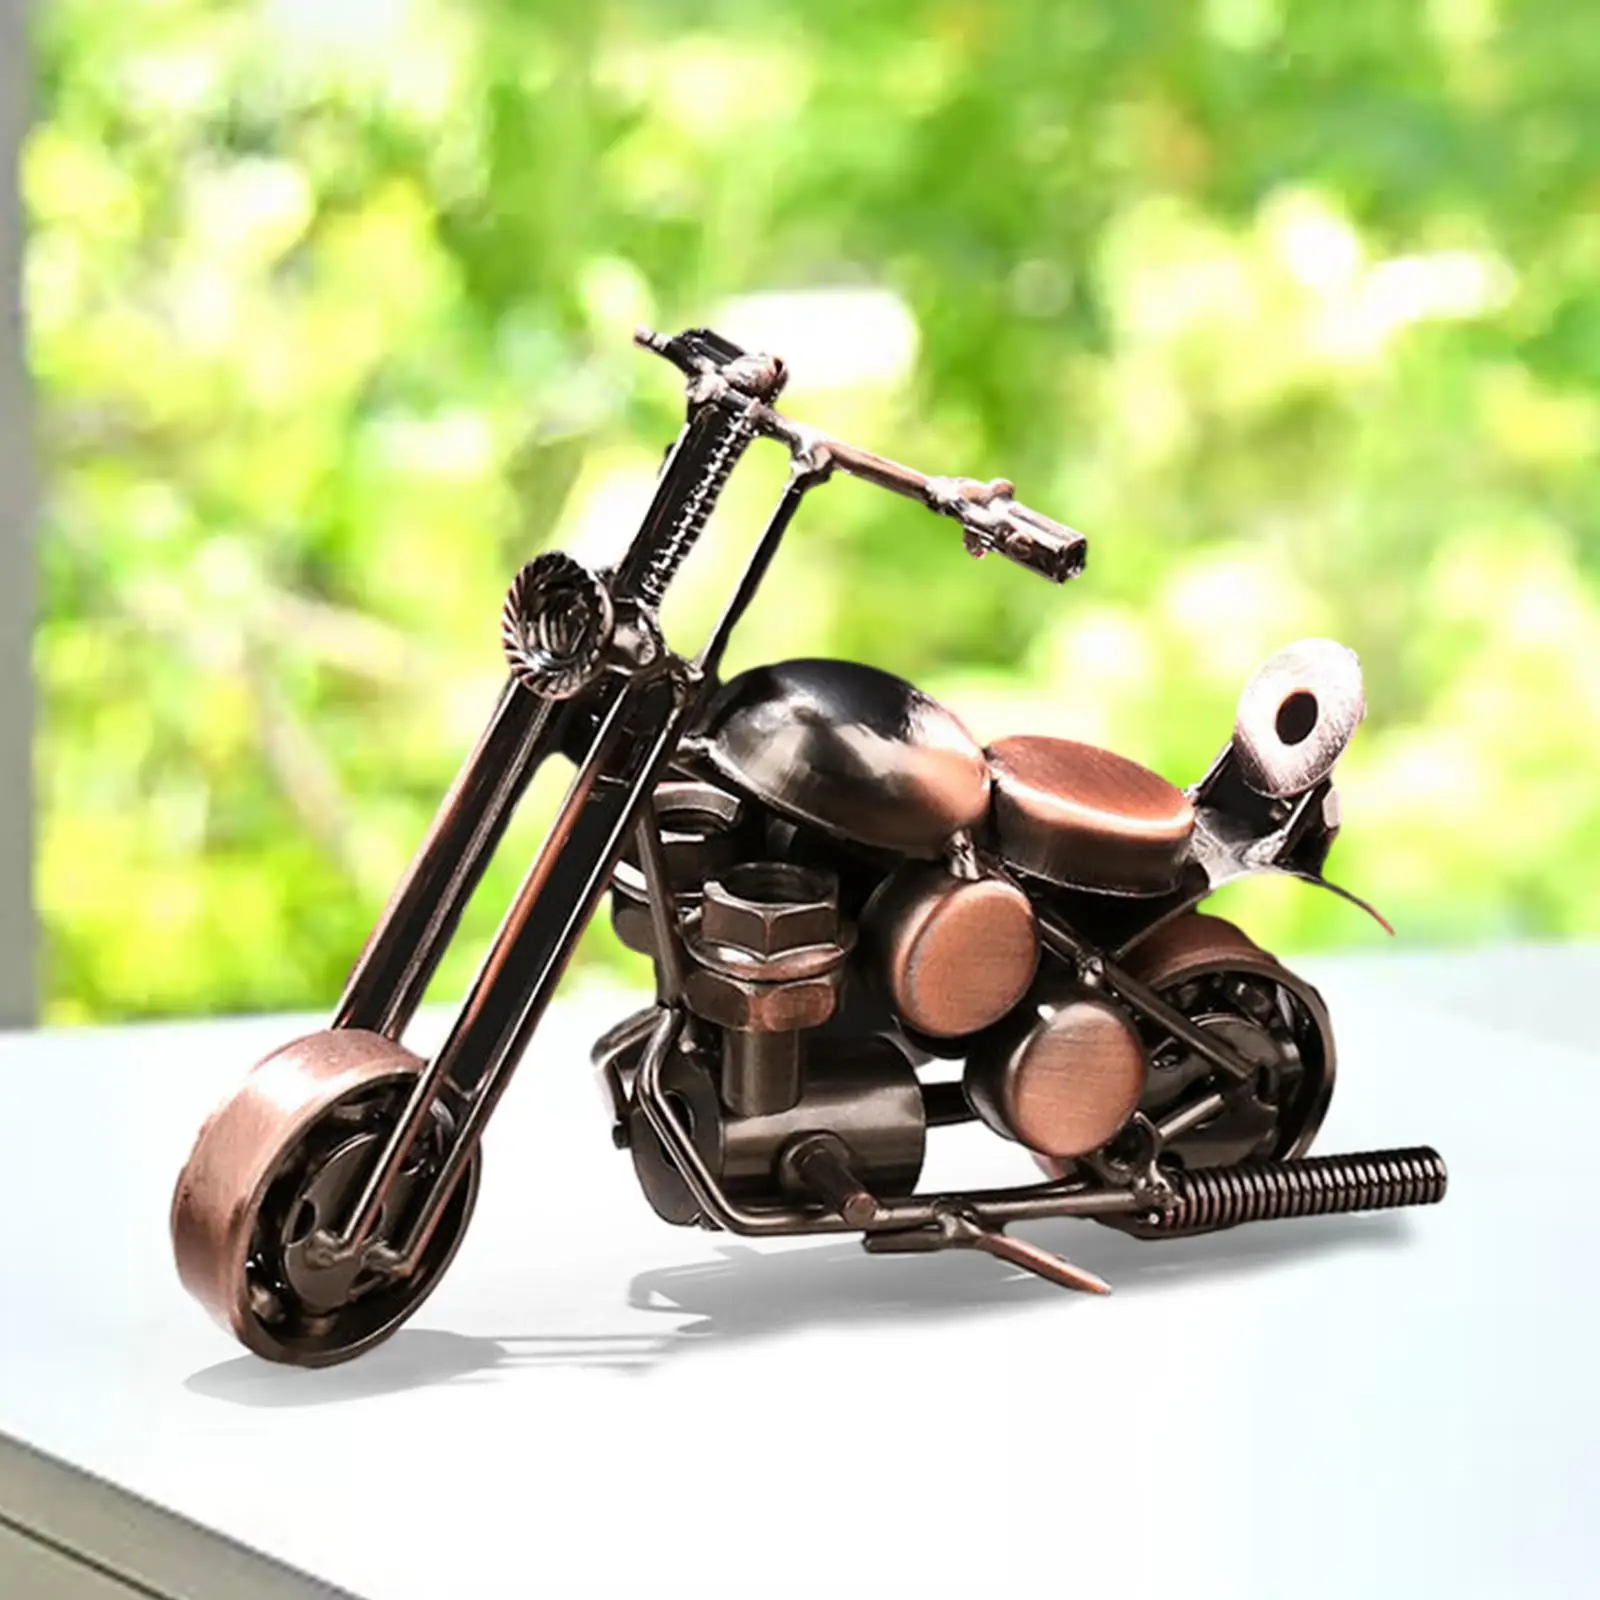 Metal Motorcycle Model Motorcycle Sculpture Vintage Style Motorcycle Figurine Ornament for Bookshelf Desk Office Men Adults